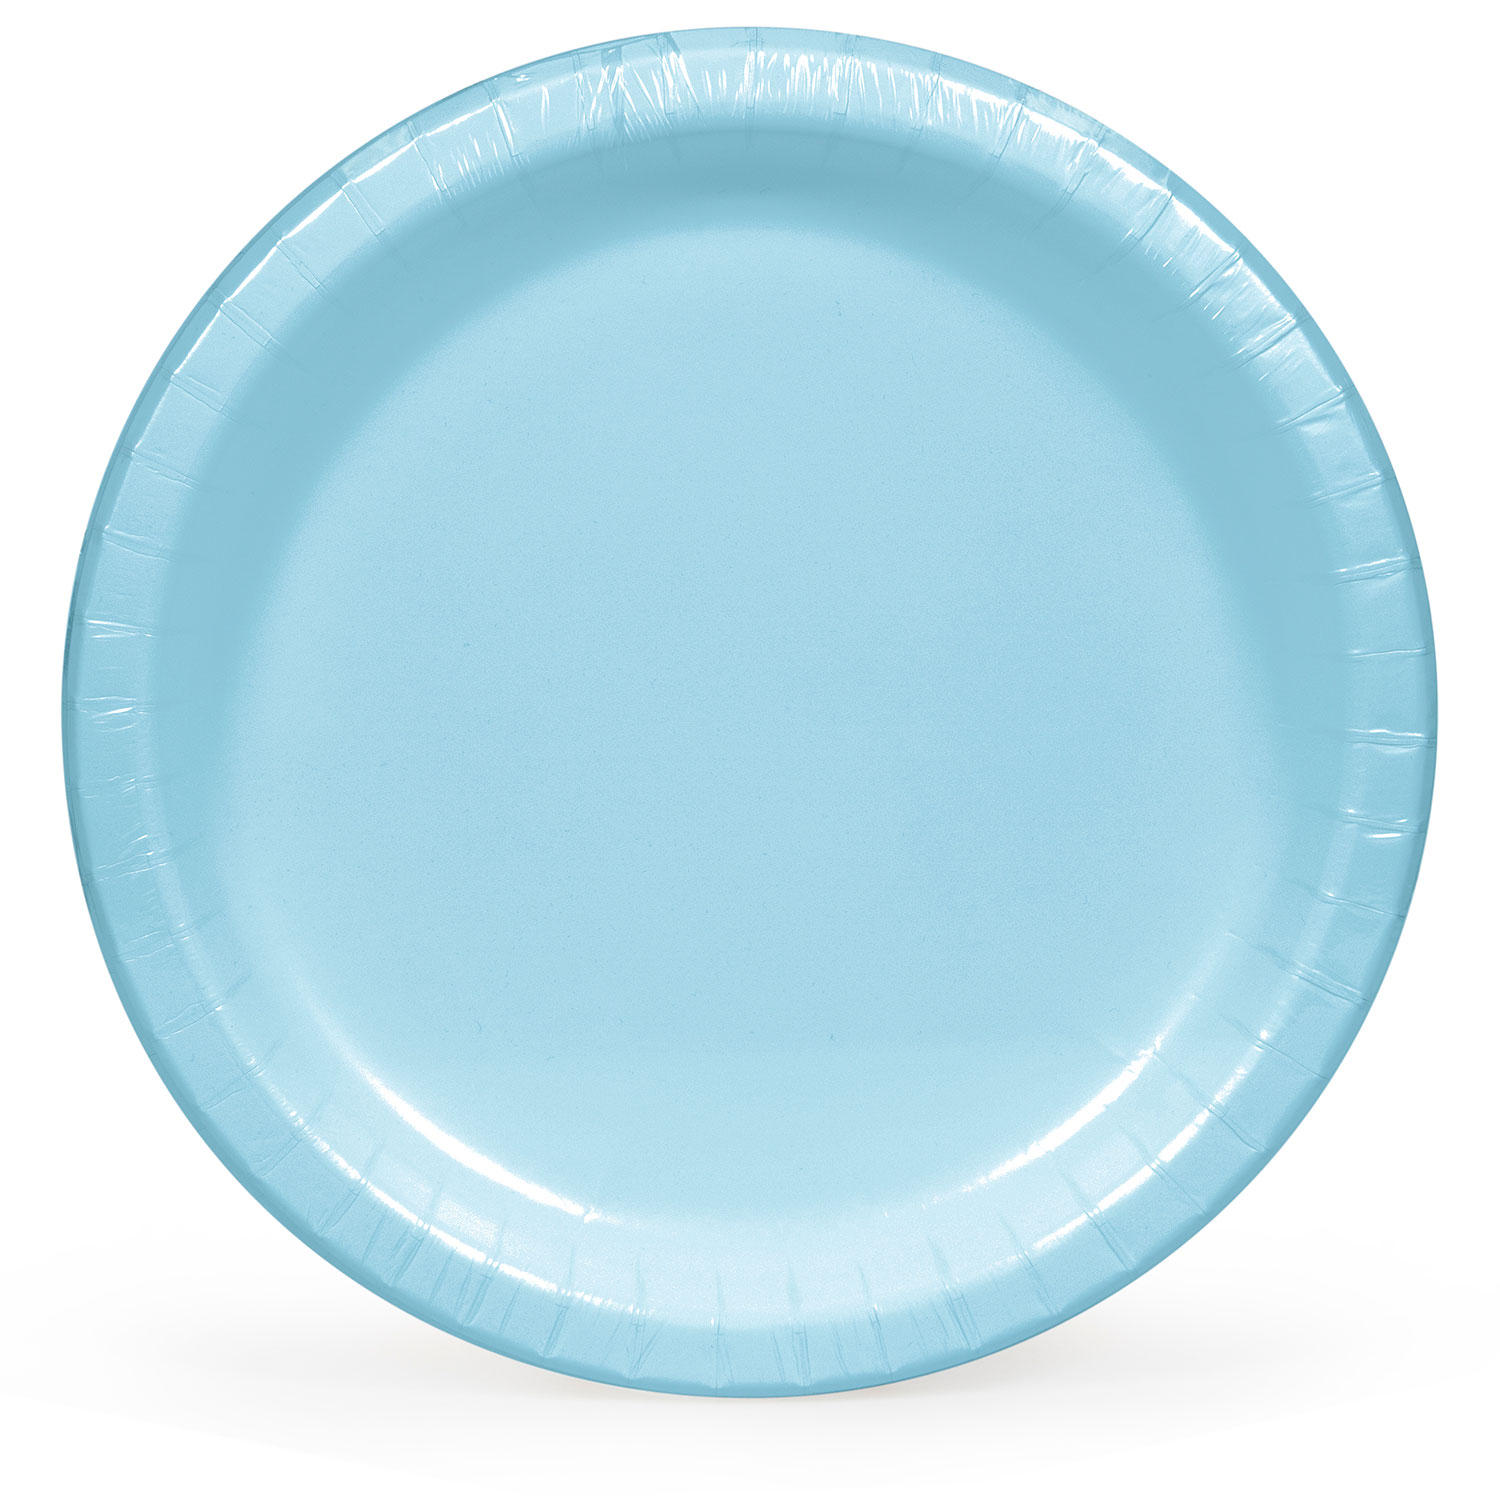 Artstyle Dinner Paper Plates, 10' (85 ct.) - Pastel Blue